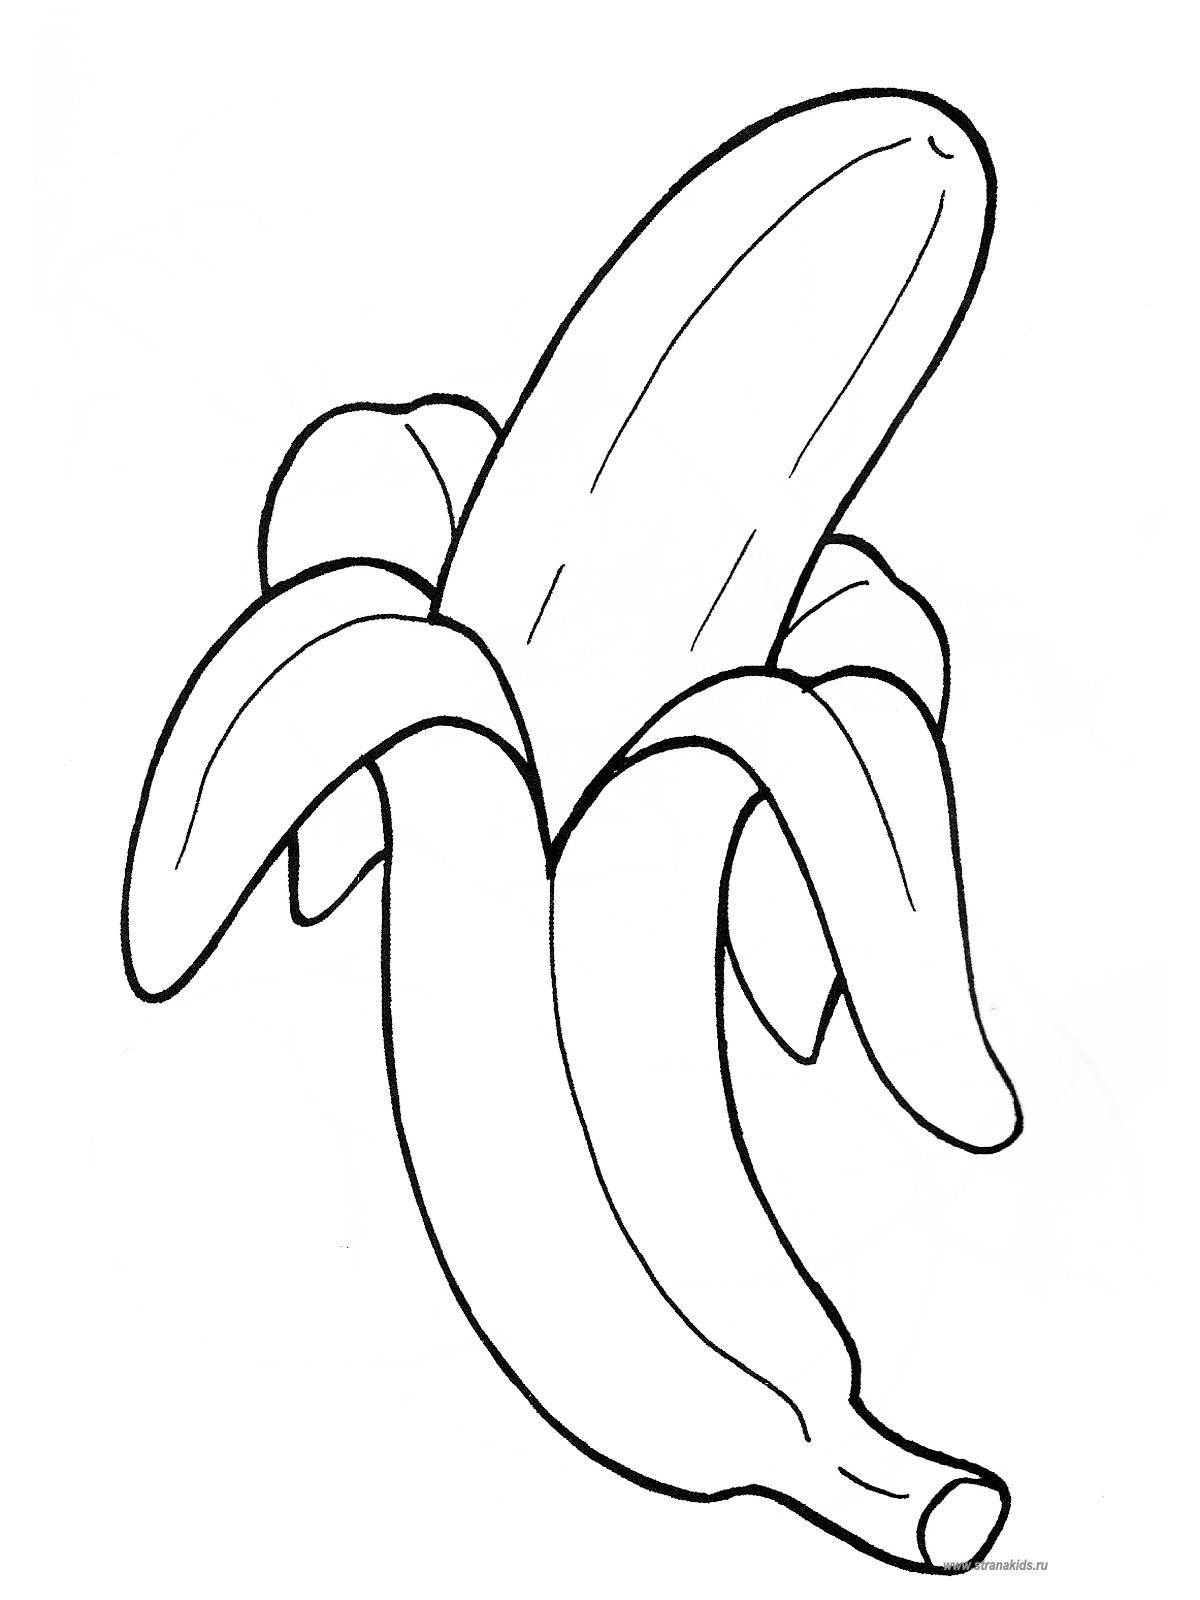 Название: Раскраска Открытый банан. Категория: фрукты. Теги: банан.